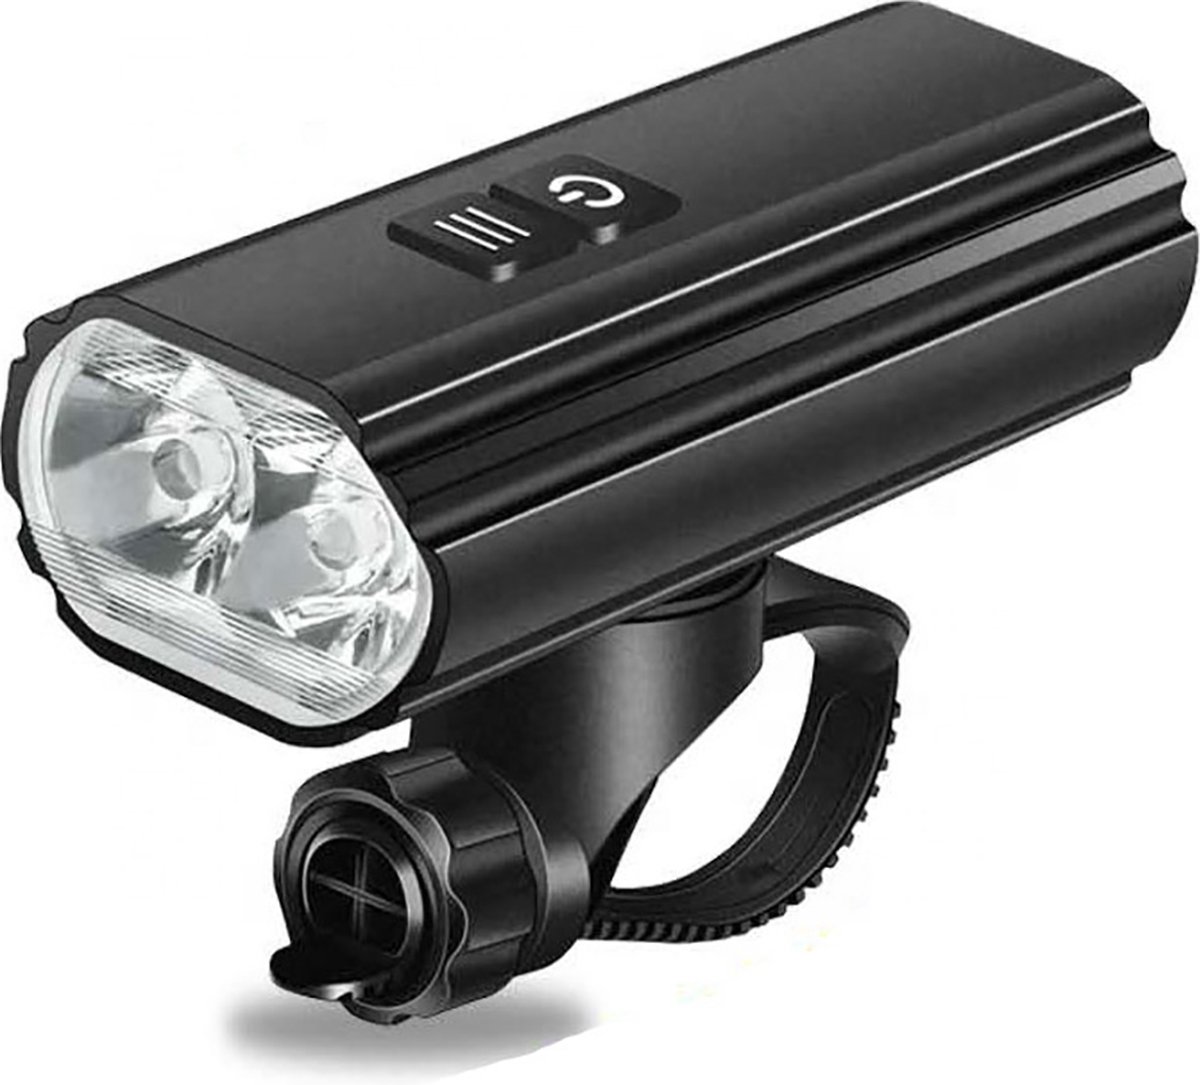 Lightyourbike ® SKYLINE 1.800 - Koplamp Fiets LED - USB Oplaadbaar - Fietslamp Racefiets & MBT - 1.800 lumen